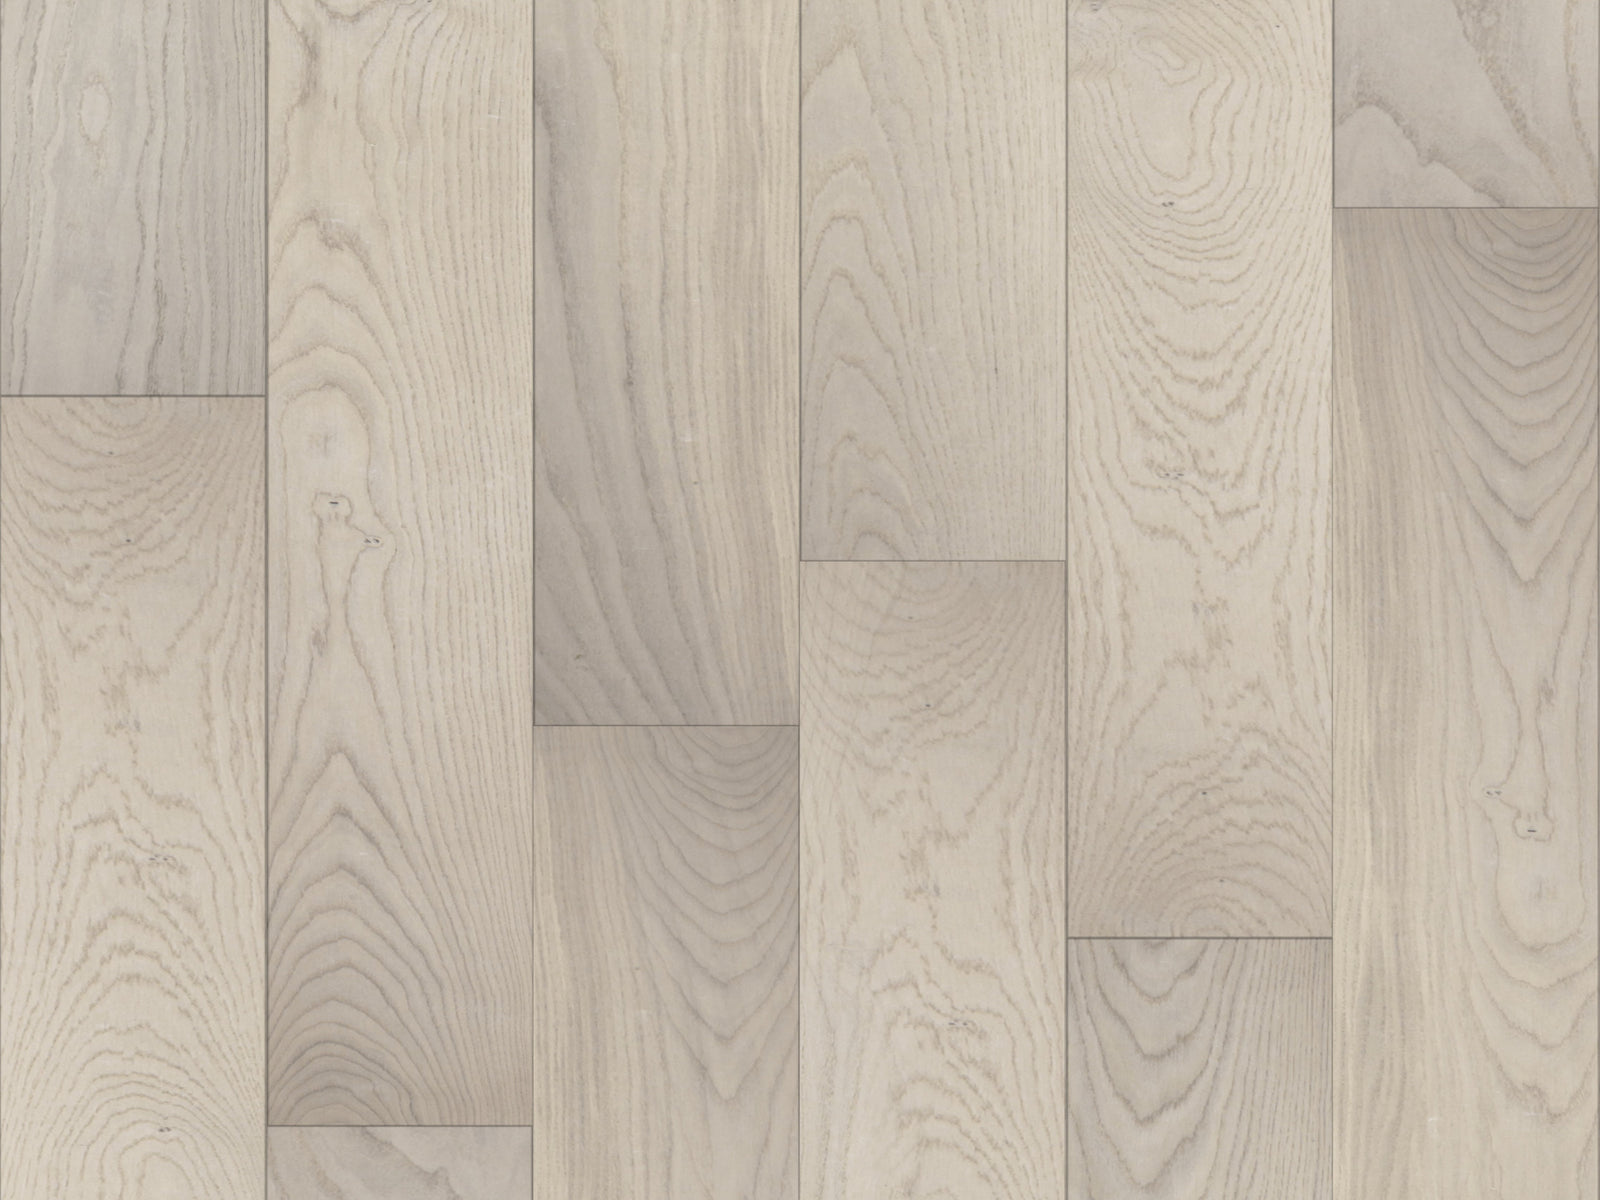 BUY ONLINE: White Patina Vernal Engineered Hardwood Flooring | European ...